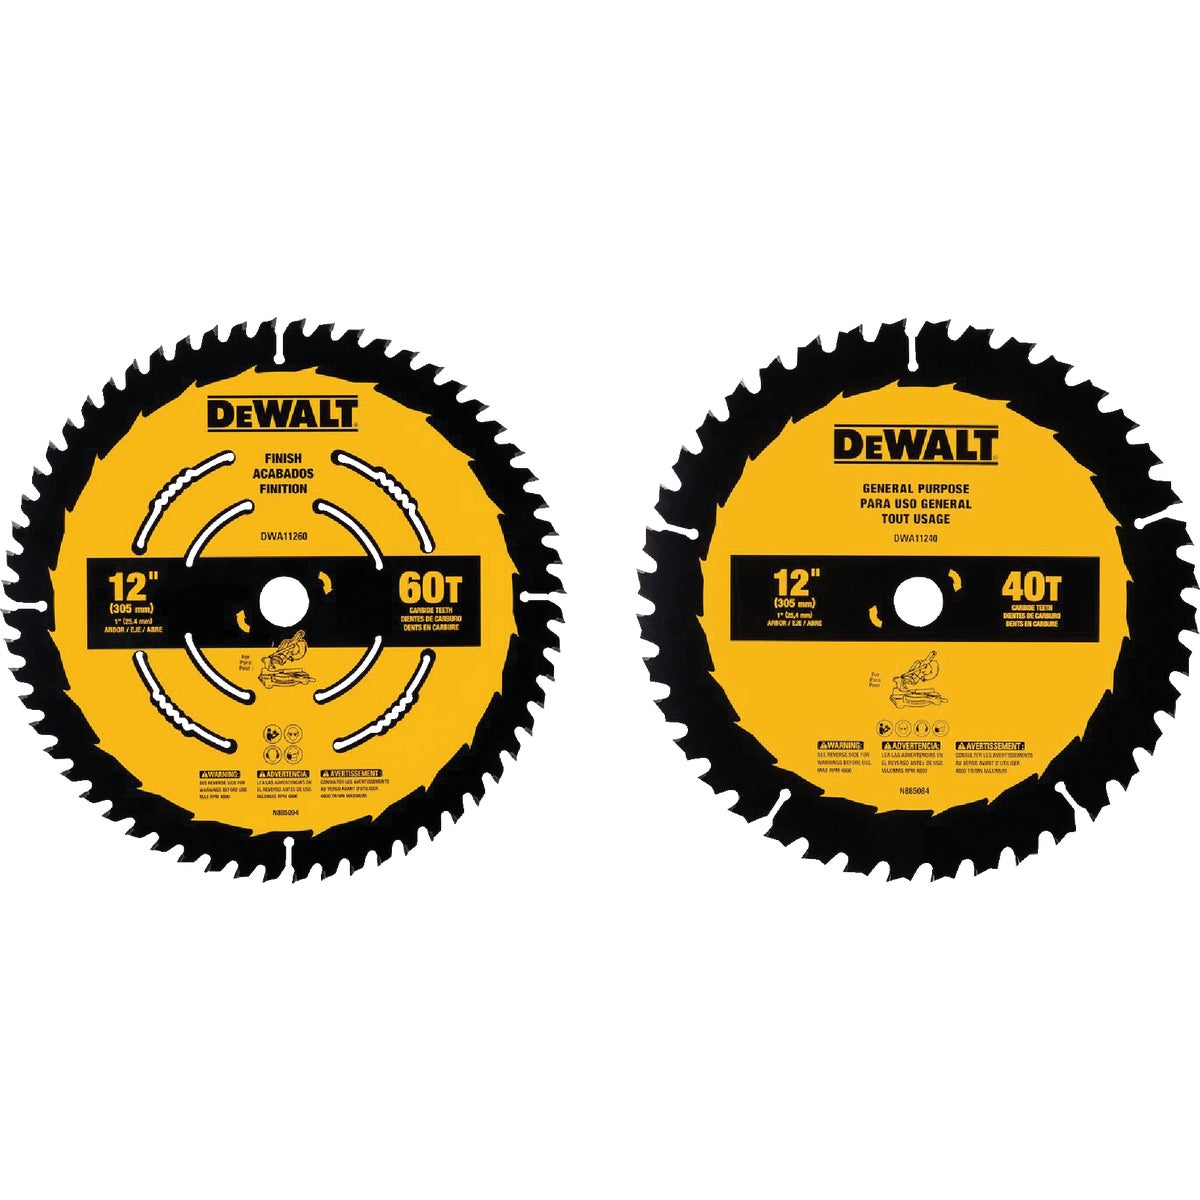 DEWALT 12 In. 40-Tooth General Purpose & 60-Tooth Fine Finish Wood Circular Saw Blade Set (2-Pack)